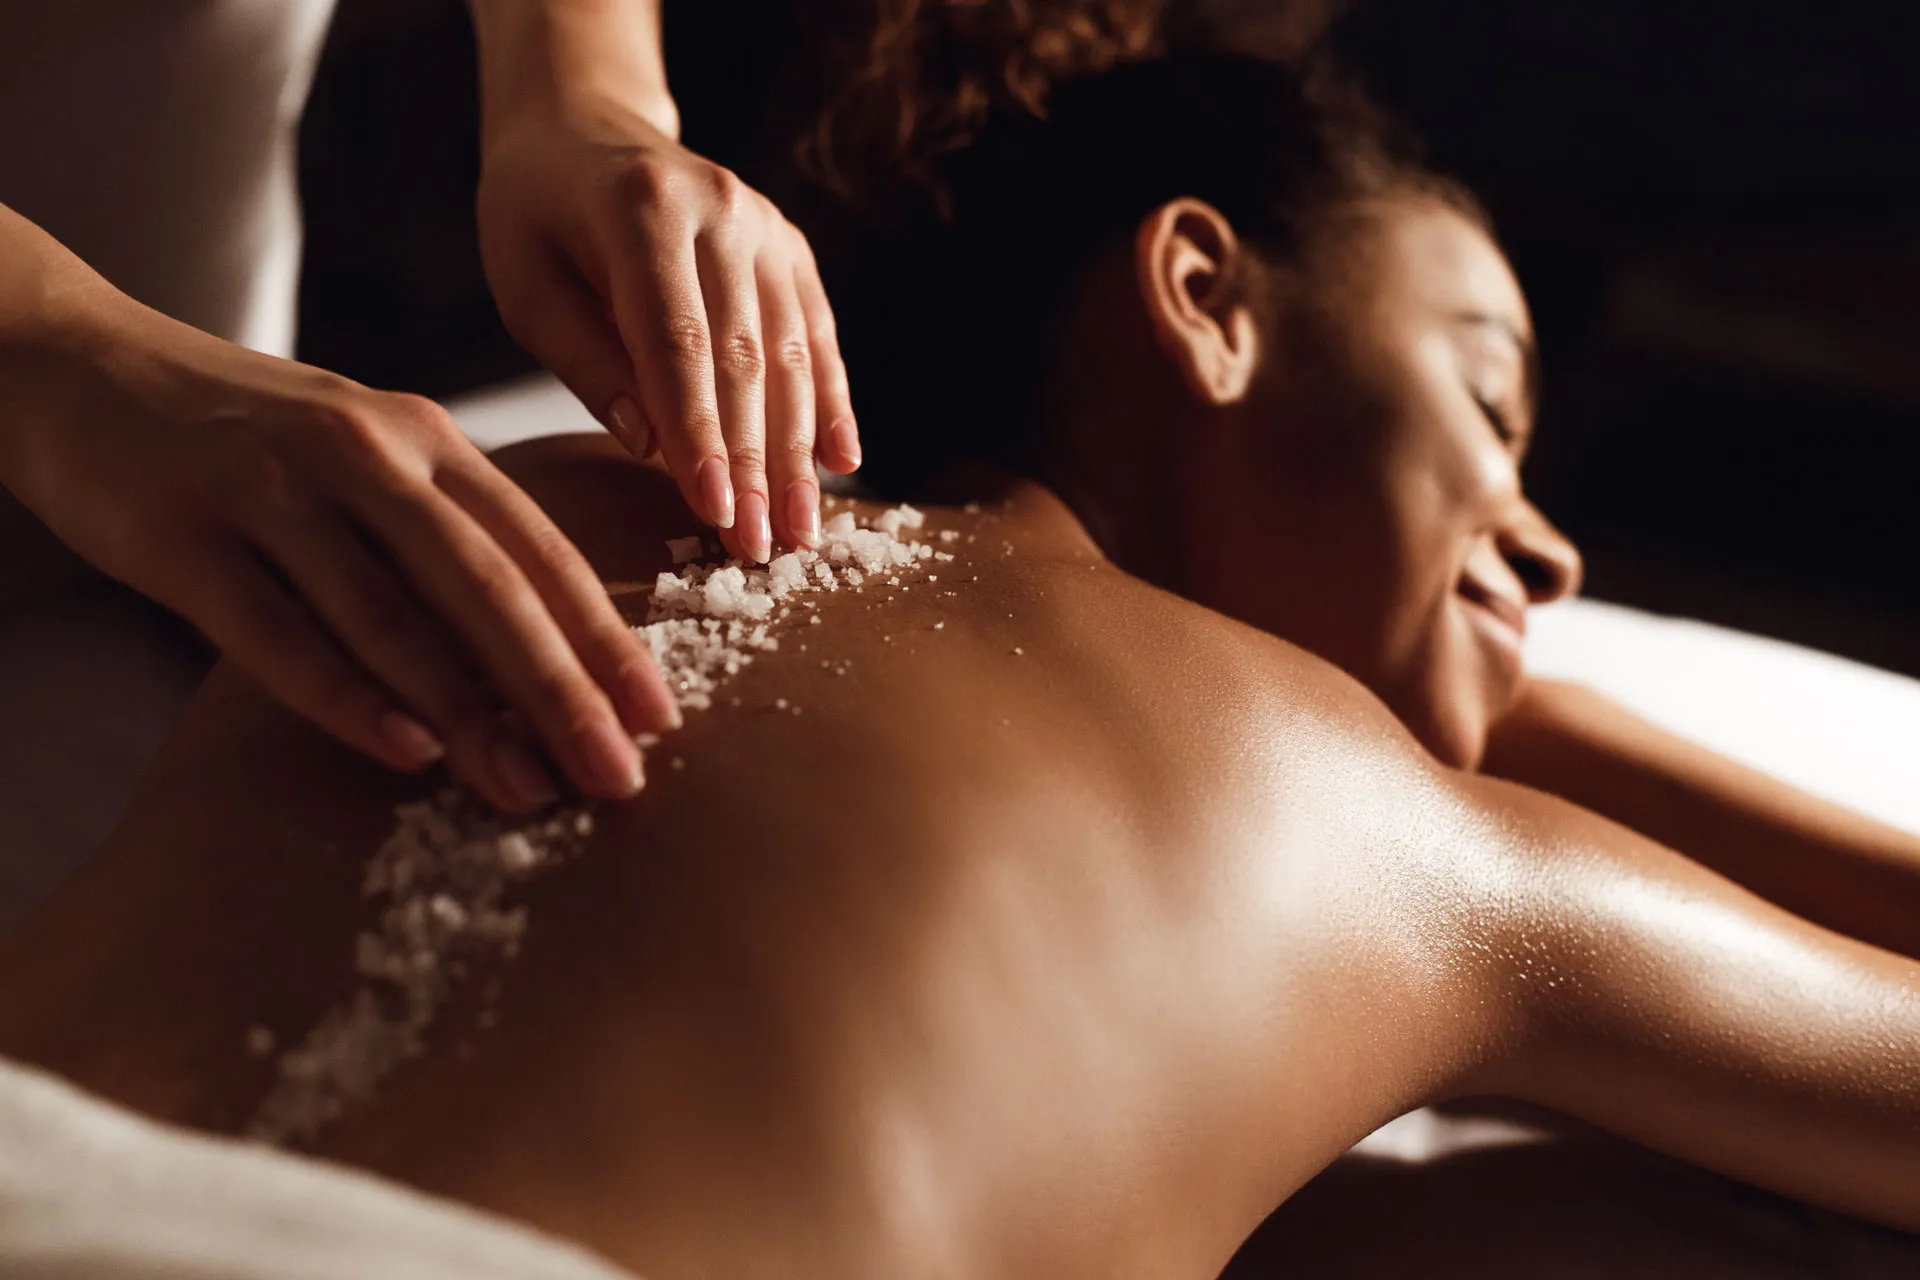 Natasha Erotic Massage in Kenya, Africa  - Rated 0.9